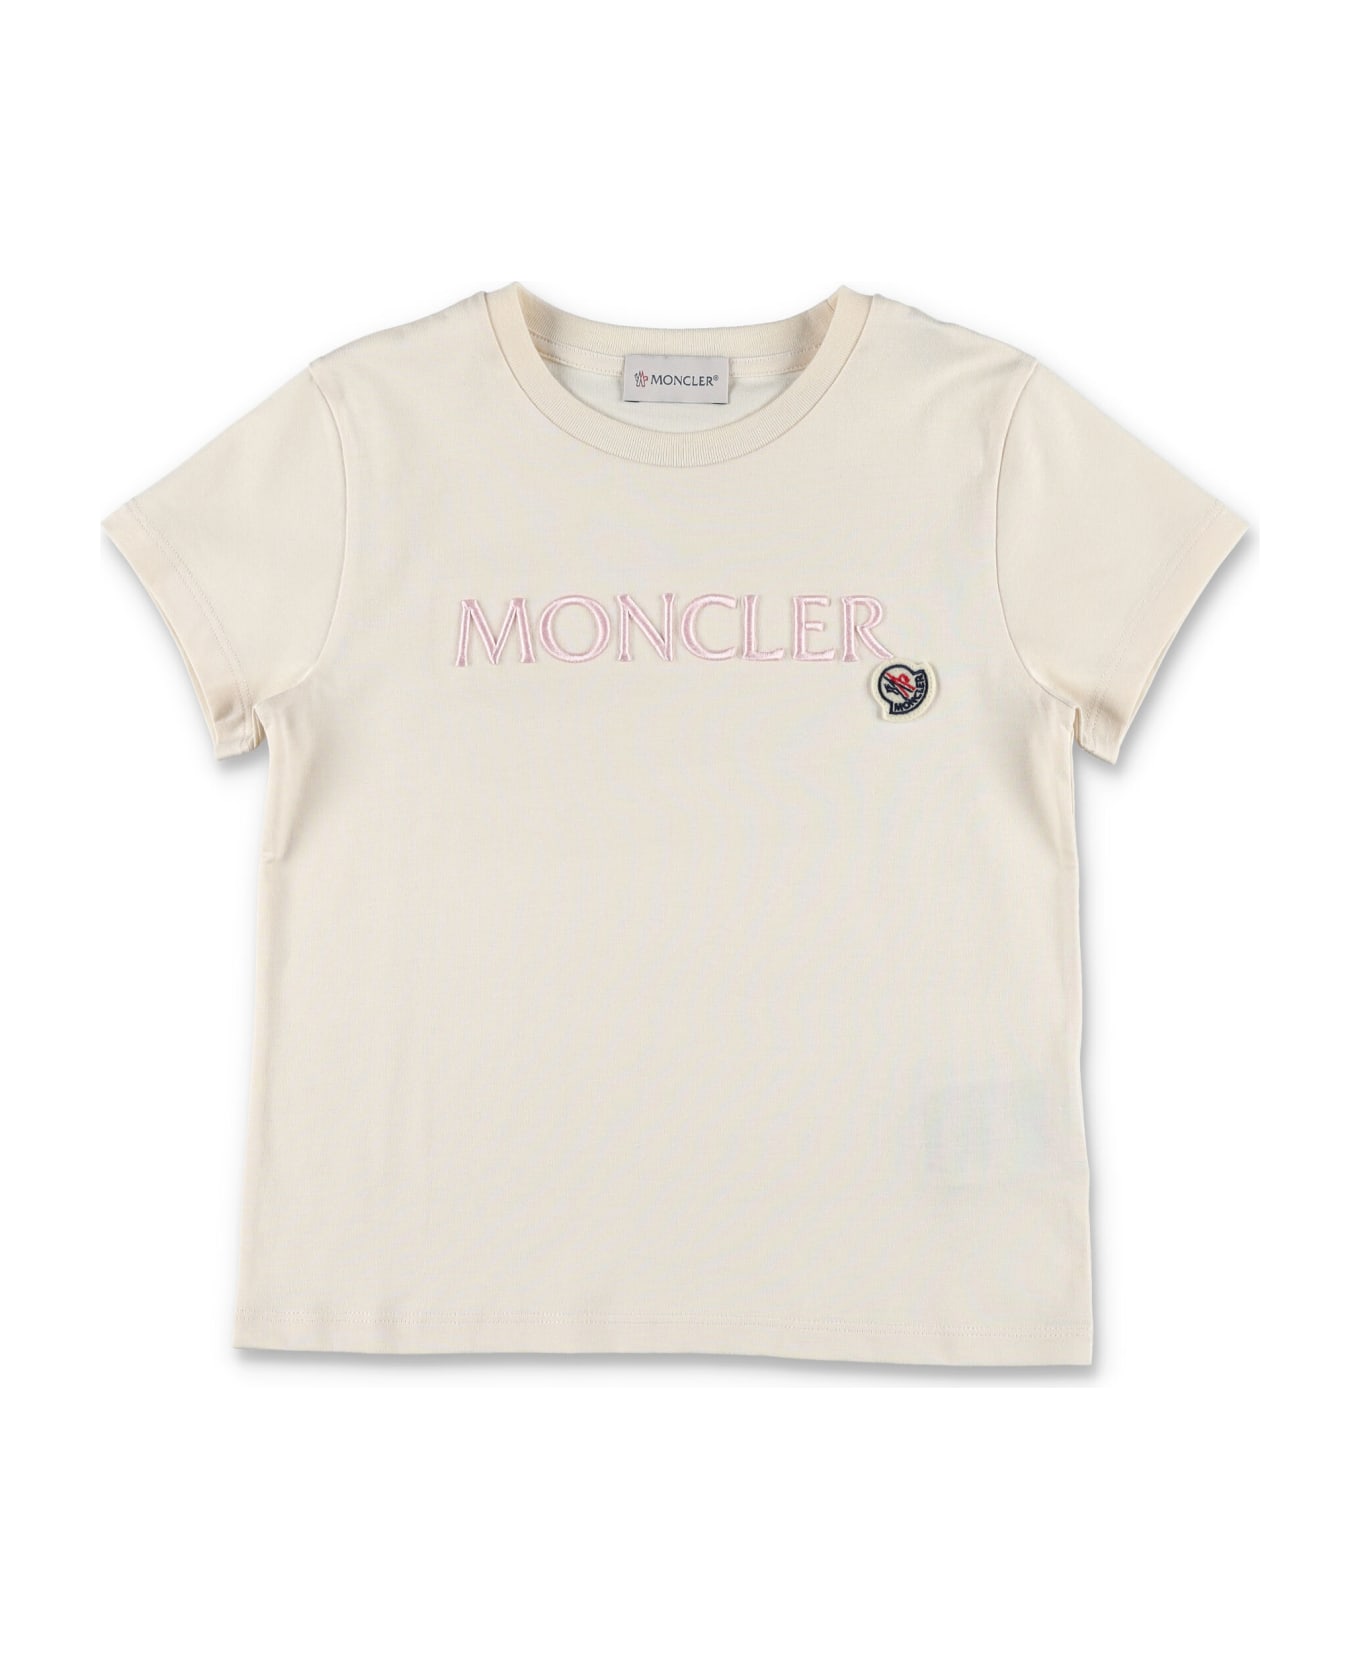 Moncler Short Sleeves T-shirt - Beige